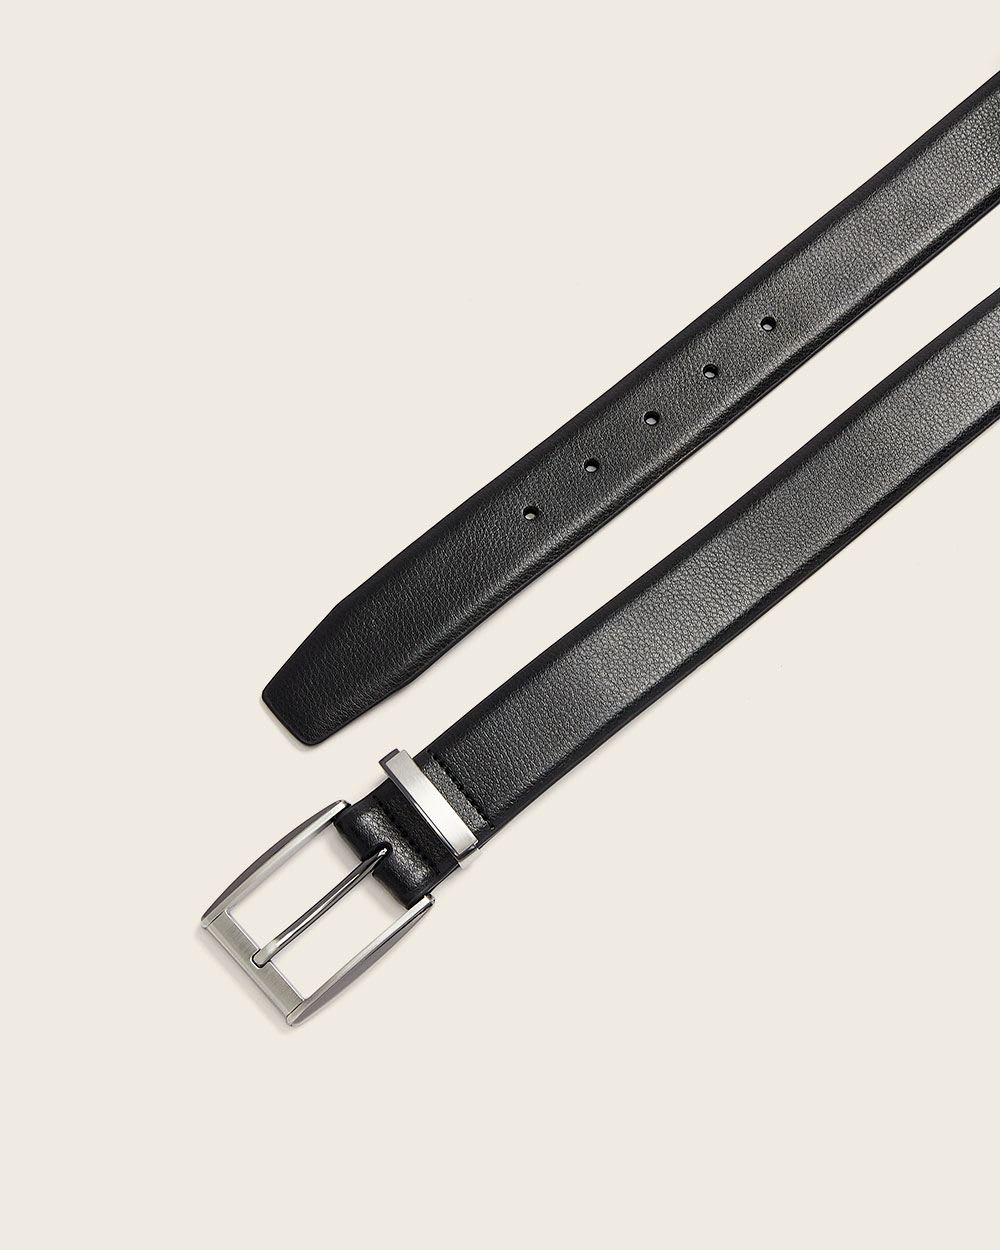 Textured Black Leather Belt